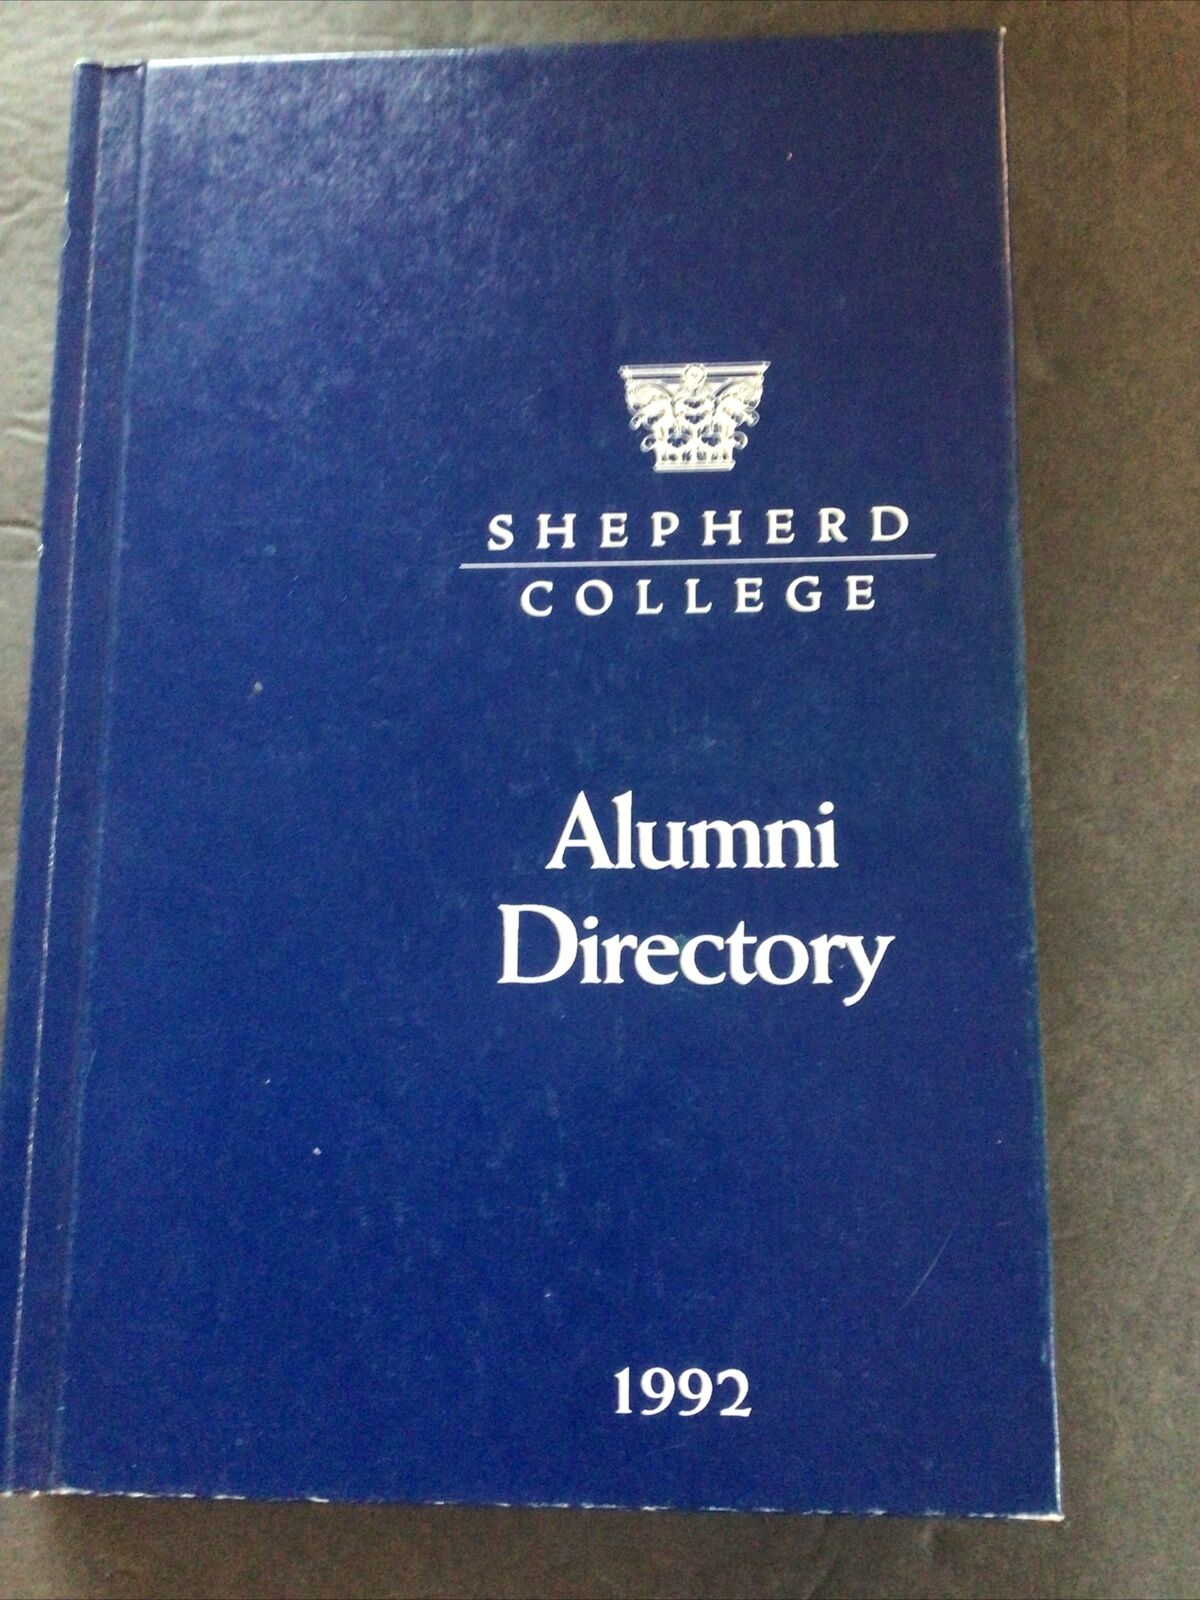 1992 Alumni Directory Shepherd College 1911-1992 Hardcover Shepherdstown WV